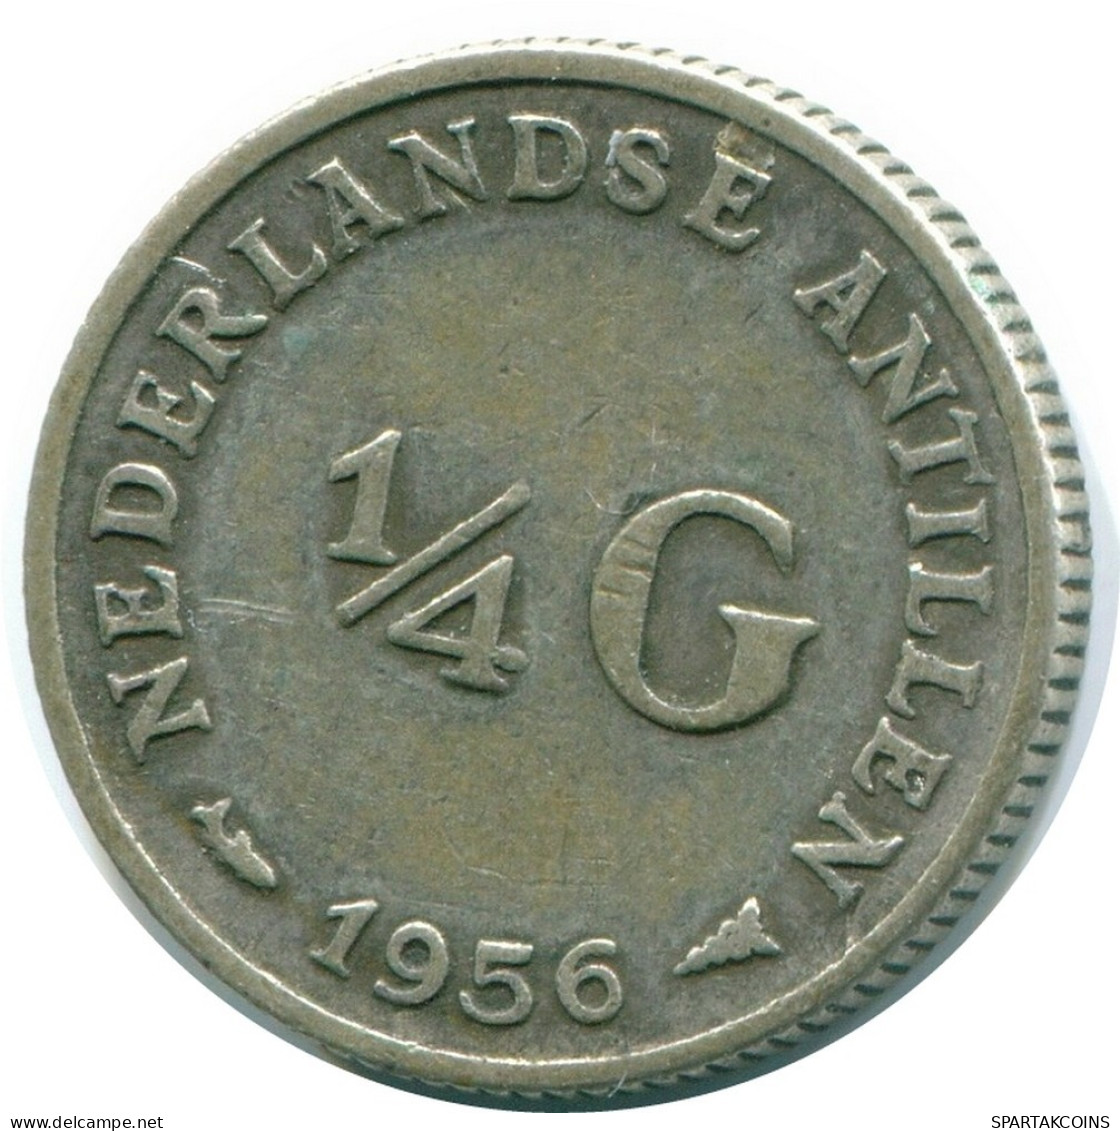 1/4 GULDEN 1956 NETHERLANDS ANTILLES SILVER Colonial Coin #NL10935.4.U.A - Antilles Néerlandaises